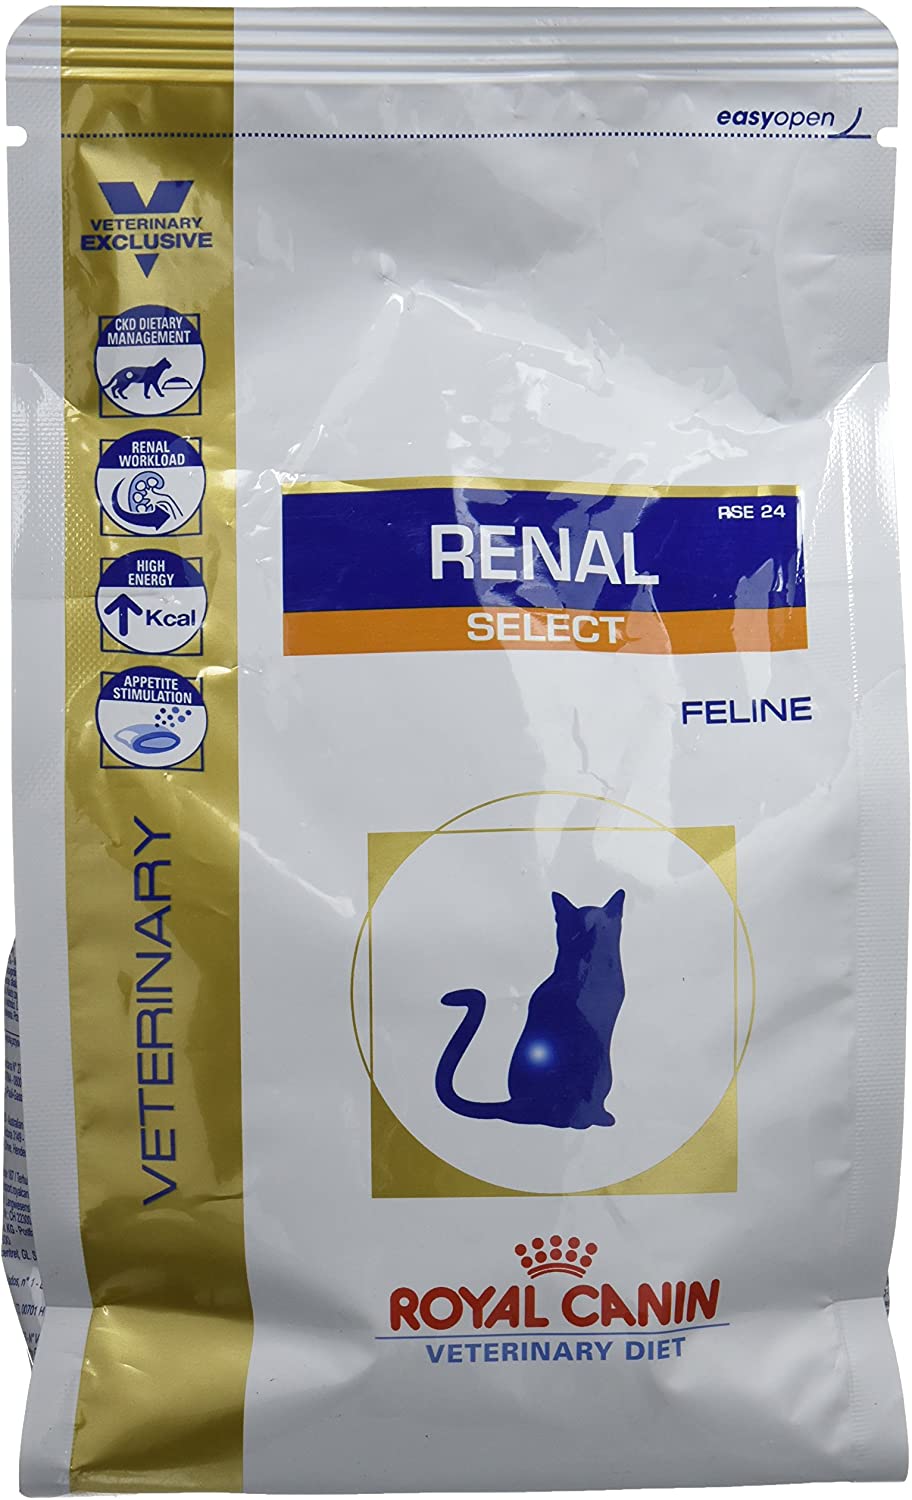  Royal Canin Veterinary Diet Cat Renal Select Comida para gato 500g 